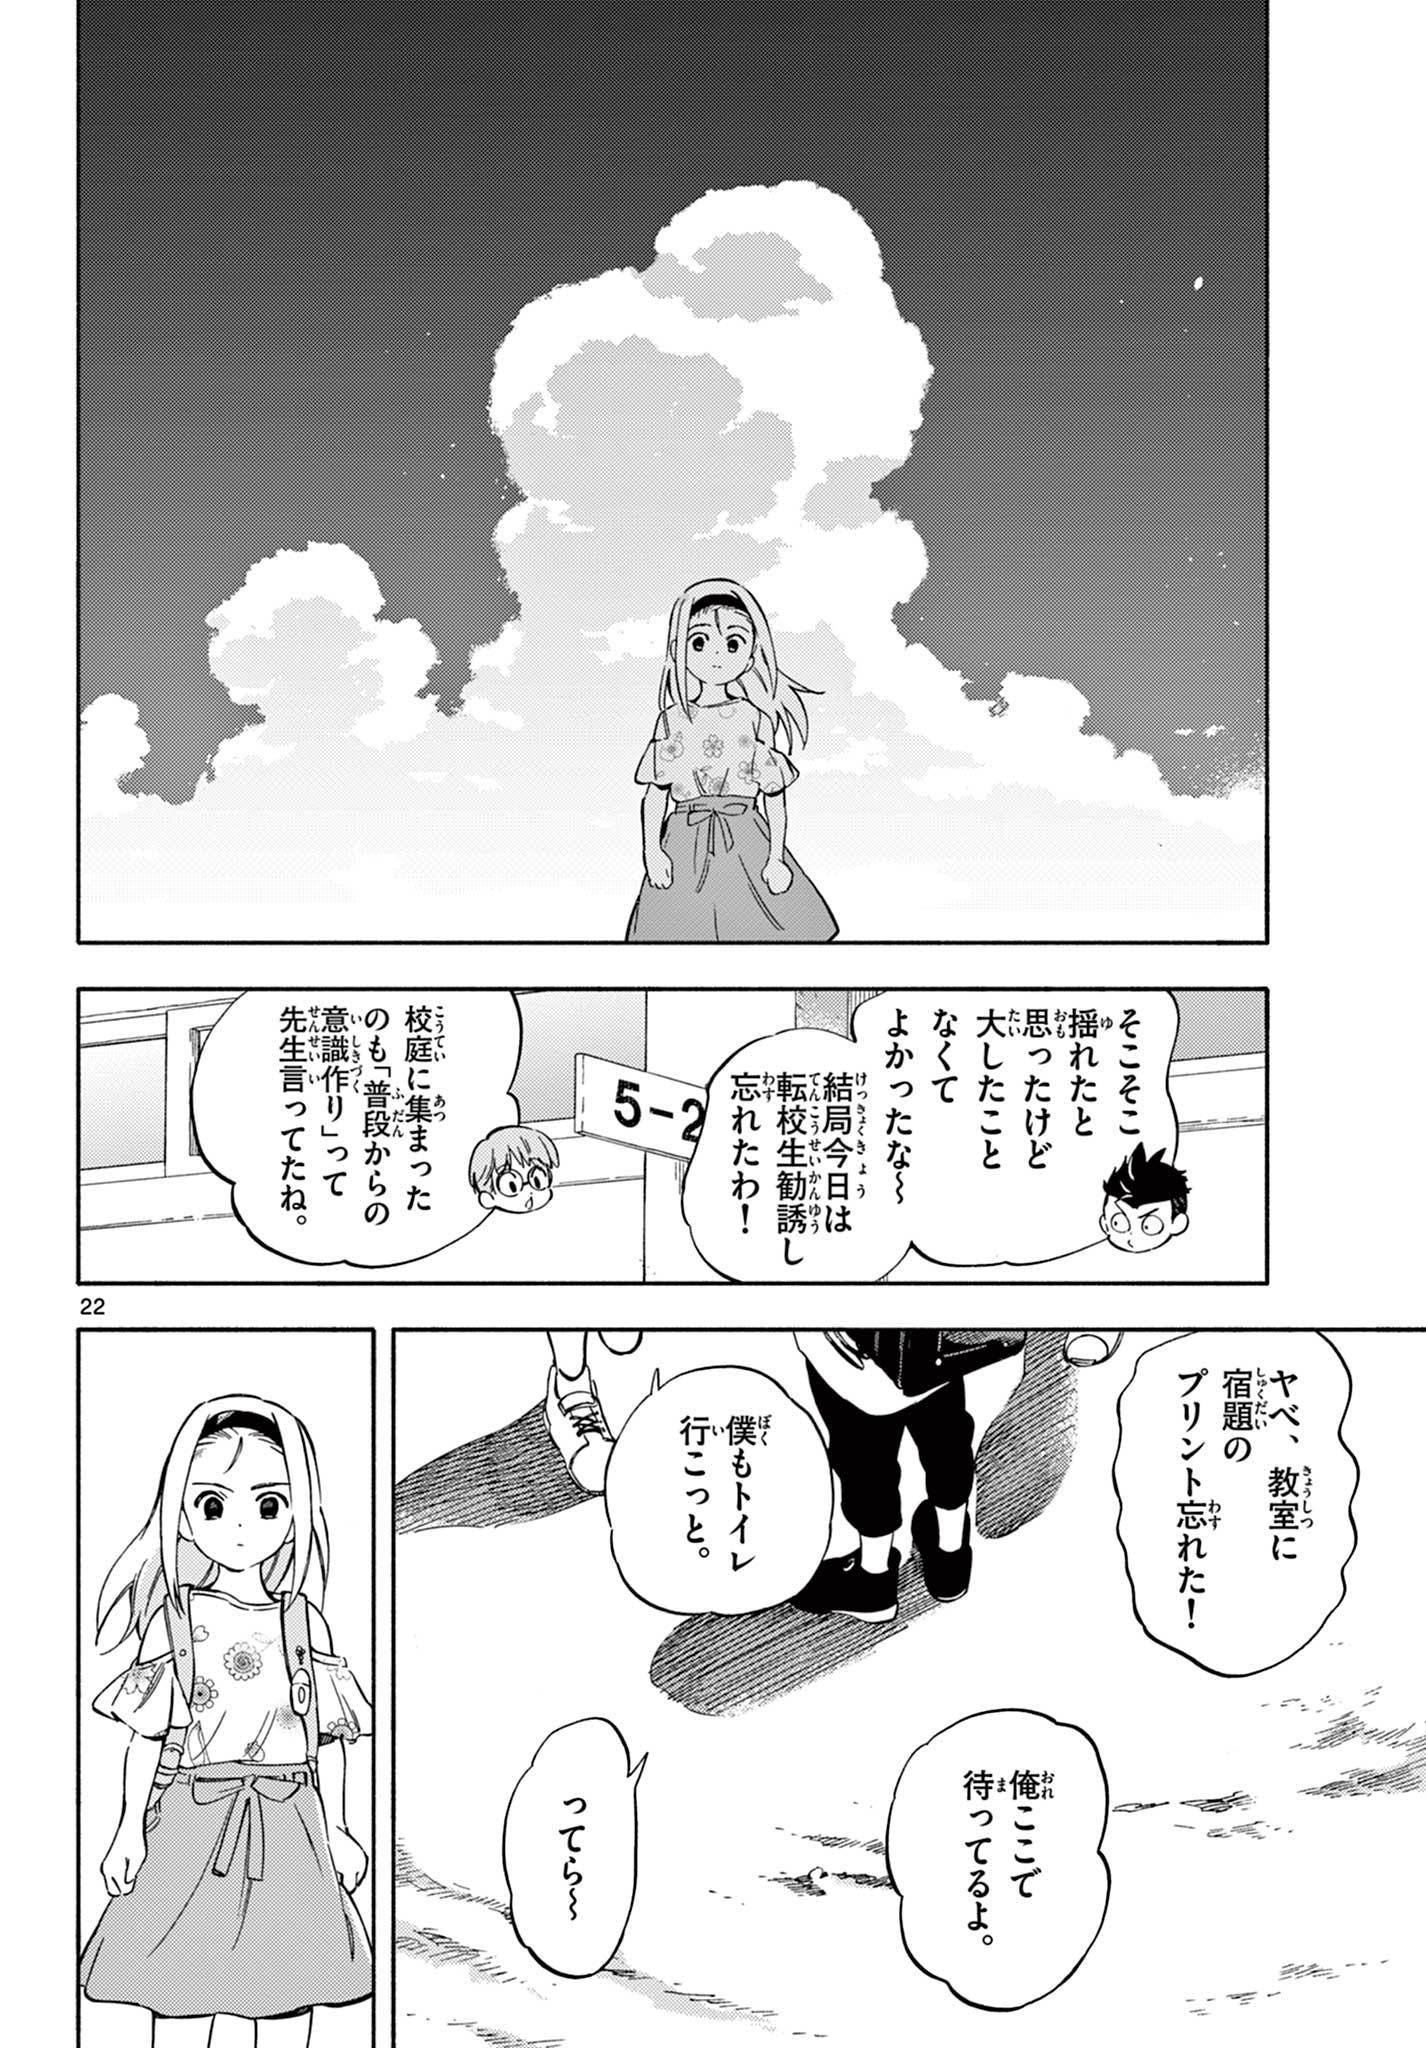 Nami no Shijima no Horizont - Chapter 8.2 - Page 8